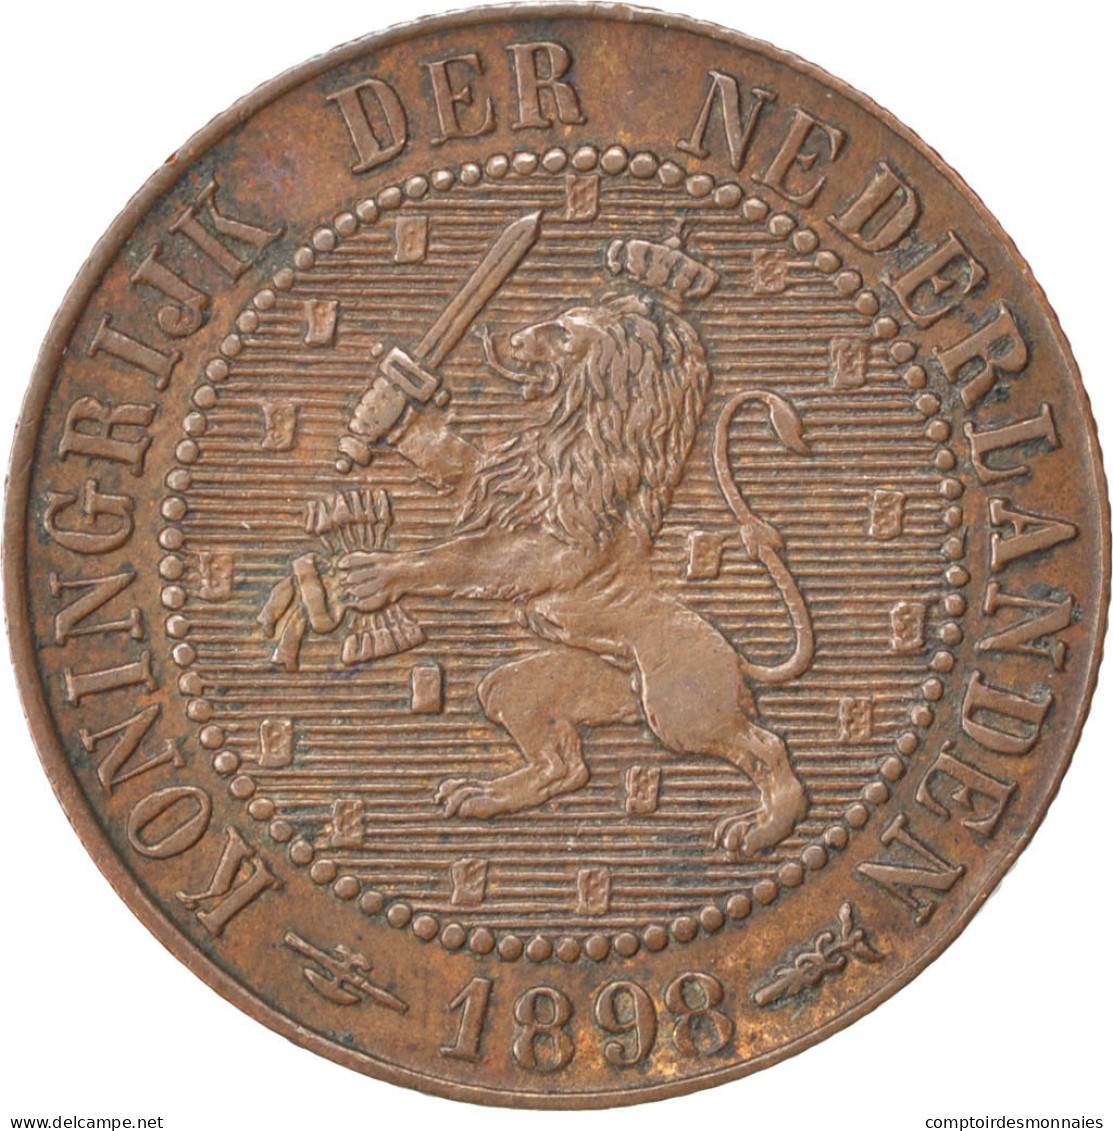 Monnaie, Pays-Bas, Wilhelmina I, 2-1/2 Cent, 1898, TTB+, Bronze, KM:108.2 - 2.5 Cent